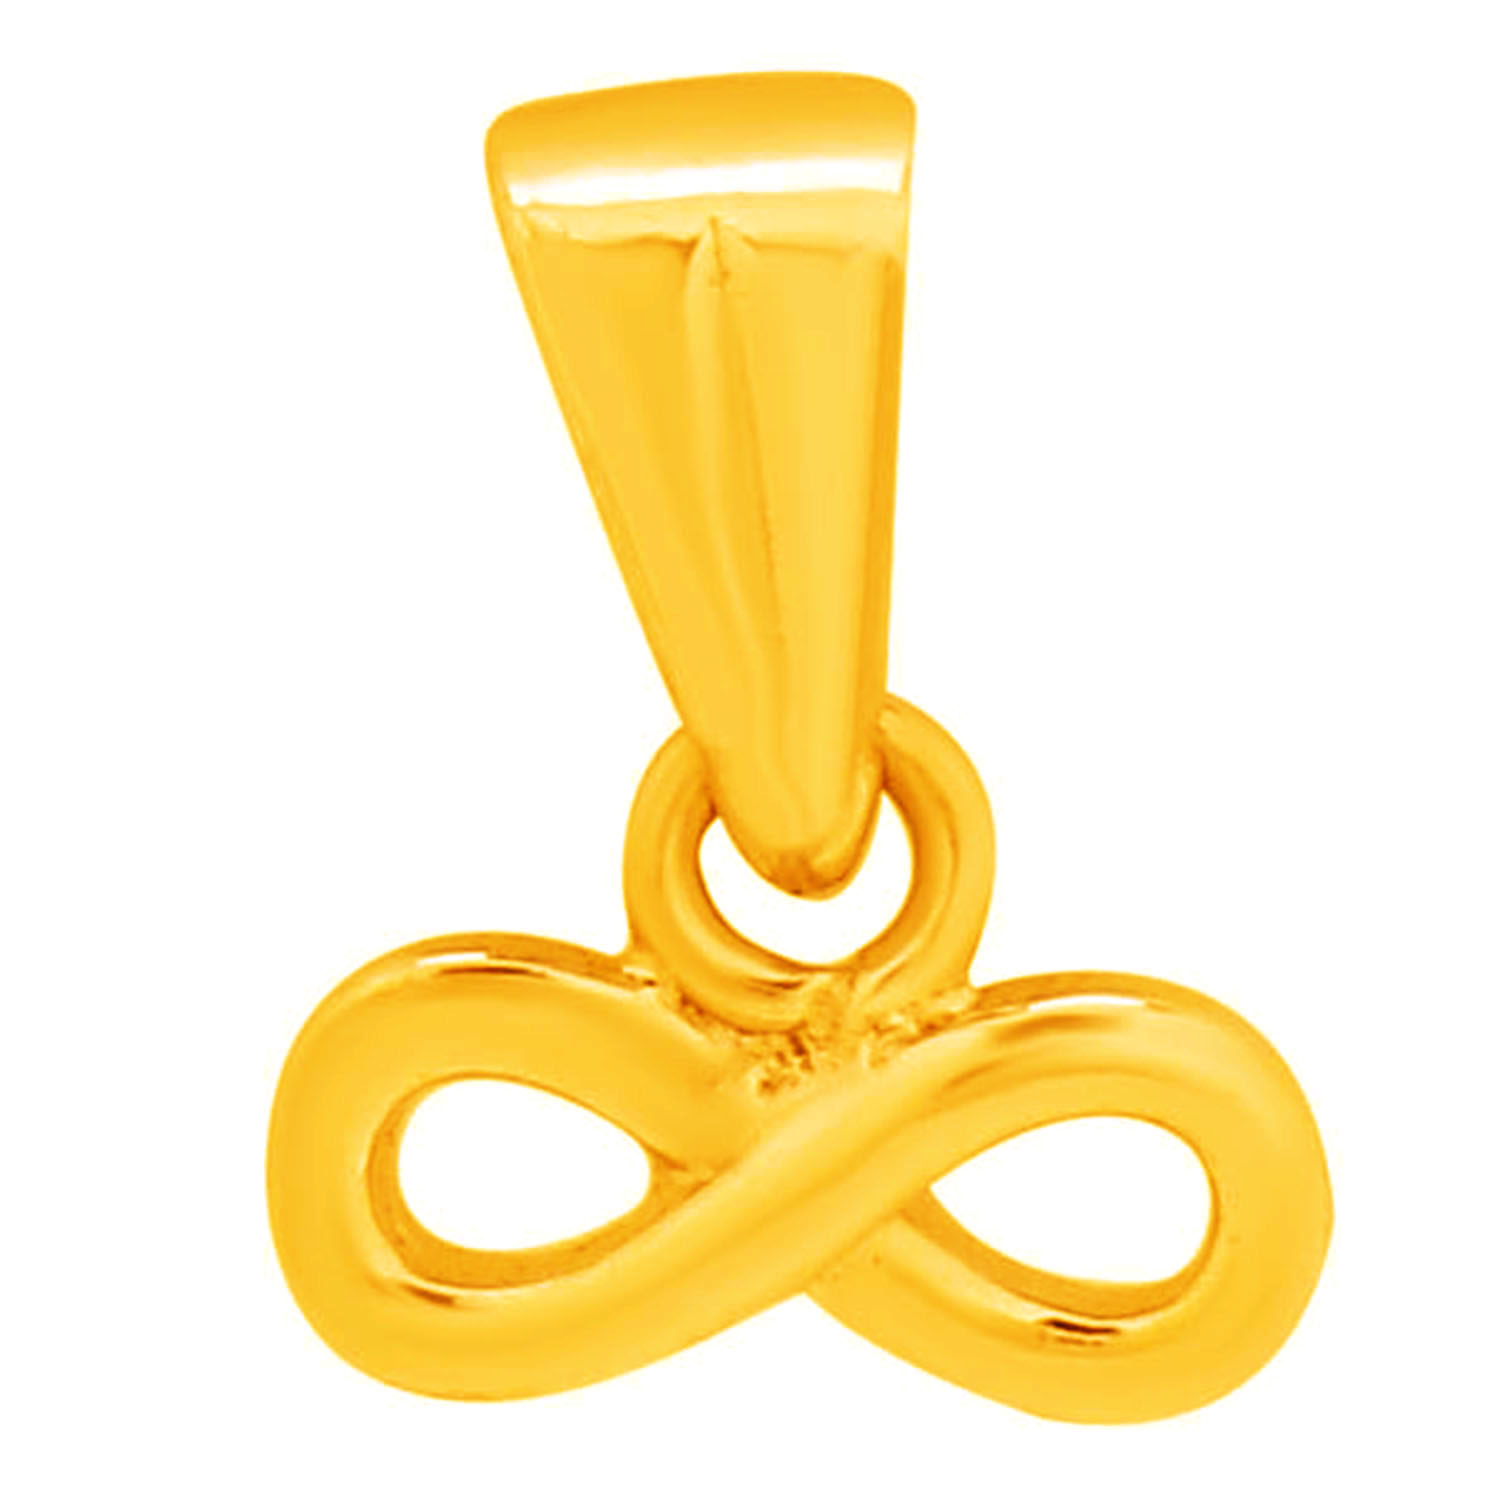 OSASPIFWCG Infinity Gold Pendant Main Gold Image